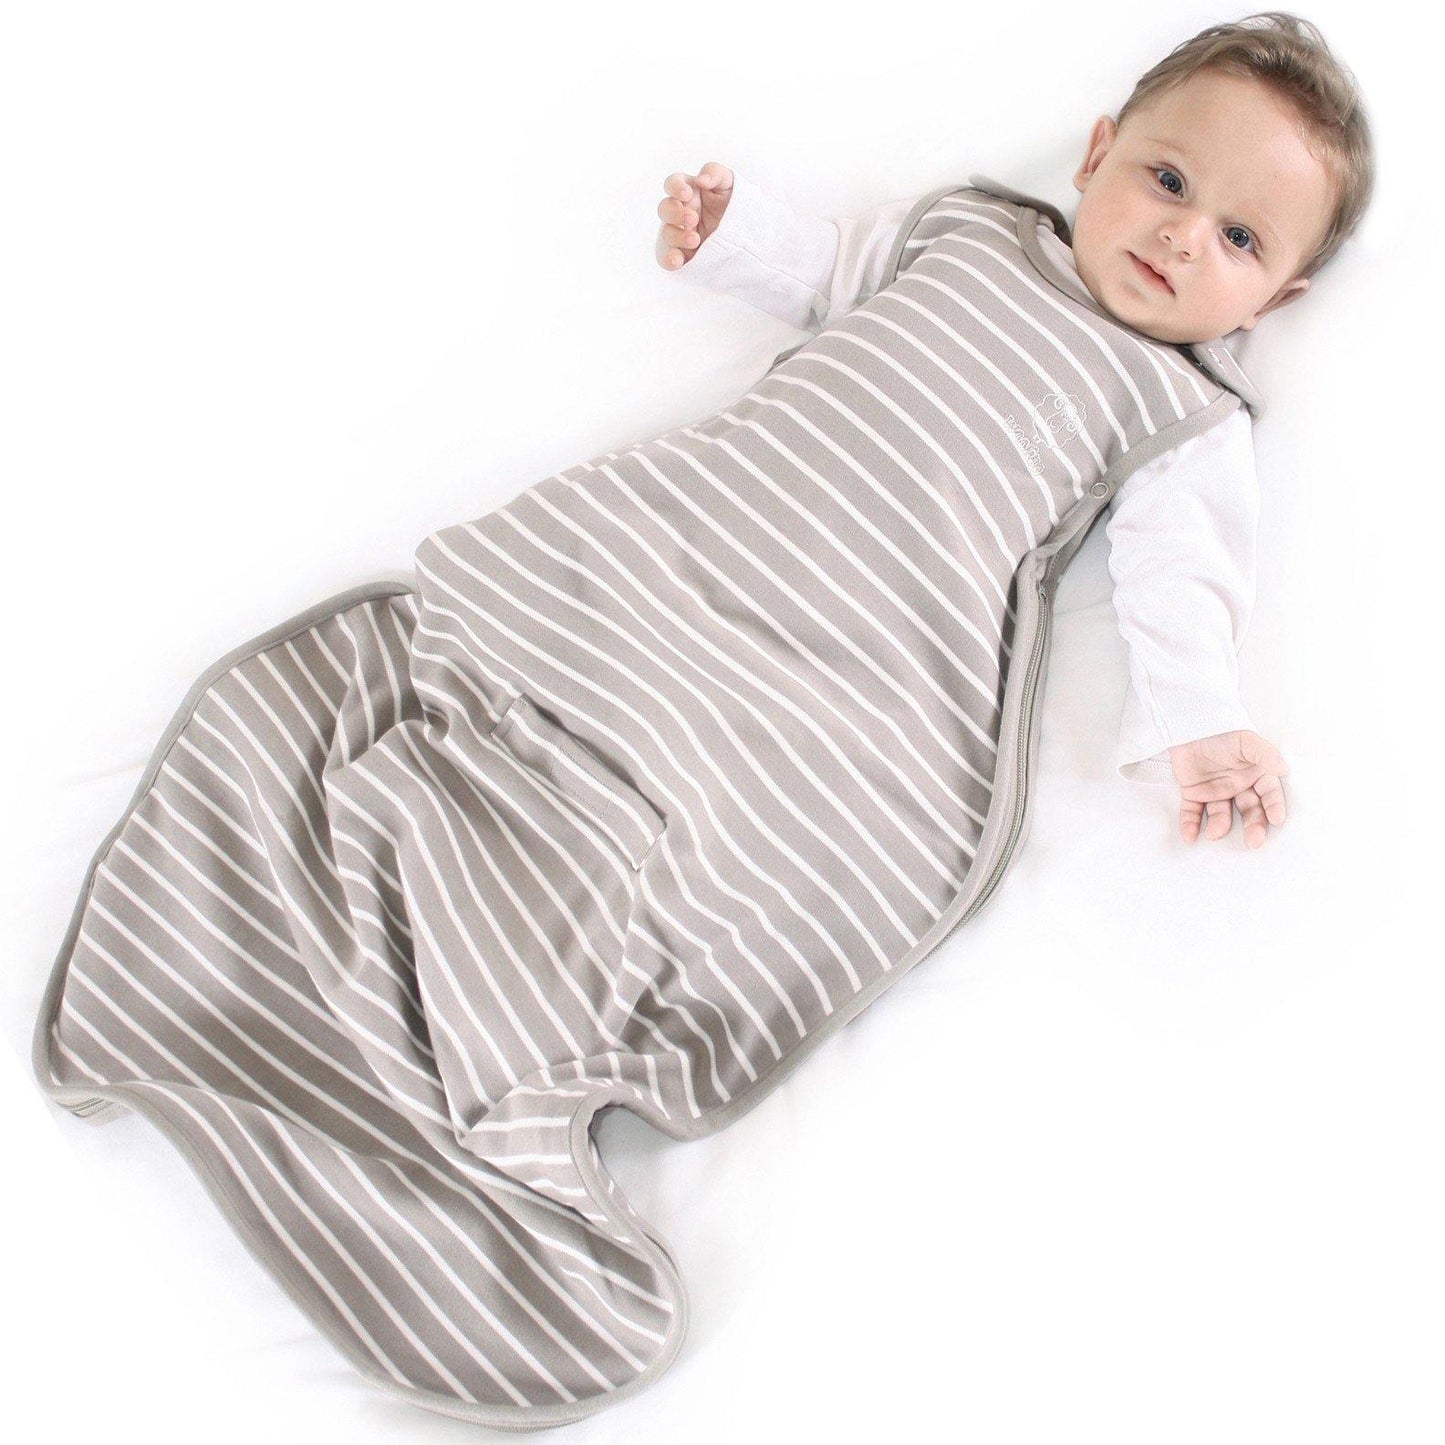 Woolino 4 Season Ultimate Baby Sleep Bag - Merino Wool / Organic Cotton - Earth